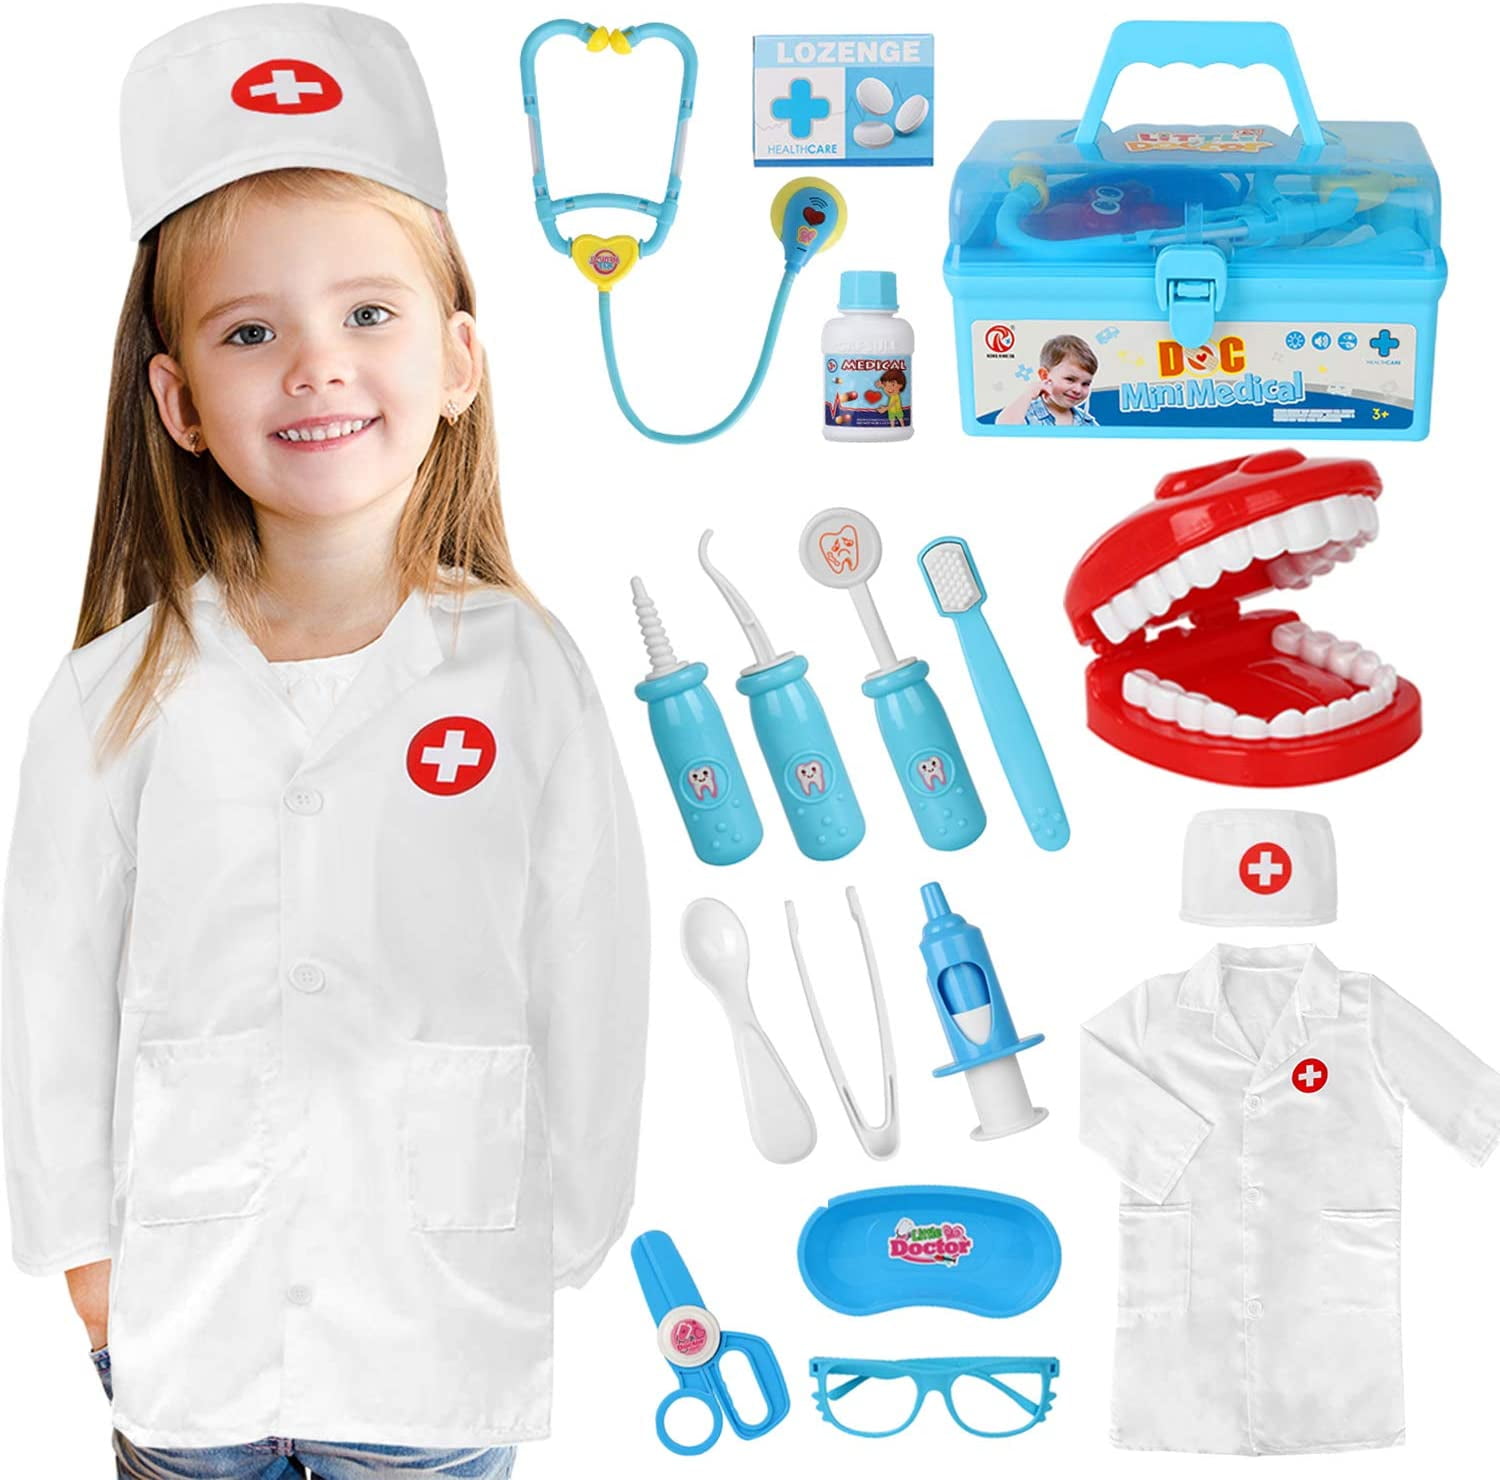 Children’s Kids Doctor's Nurse Uniform Fancy Dress Up Costume and Playset 